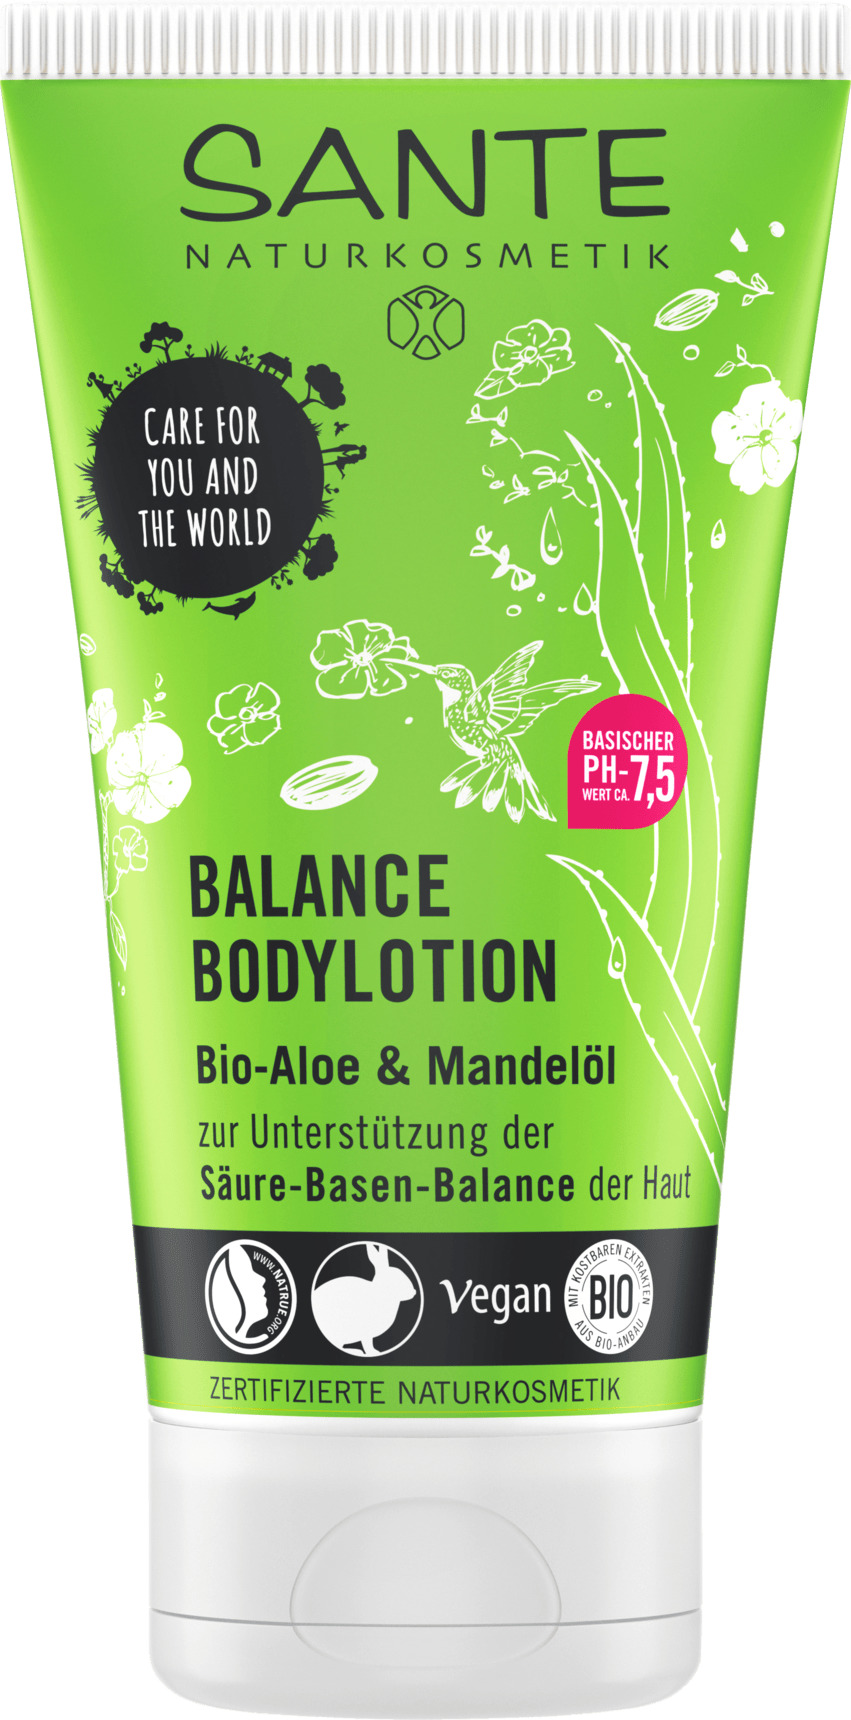 Køb Sante Body Lotion Balance billigt her! ✓ | Körperlotionen